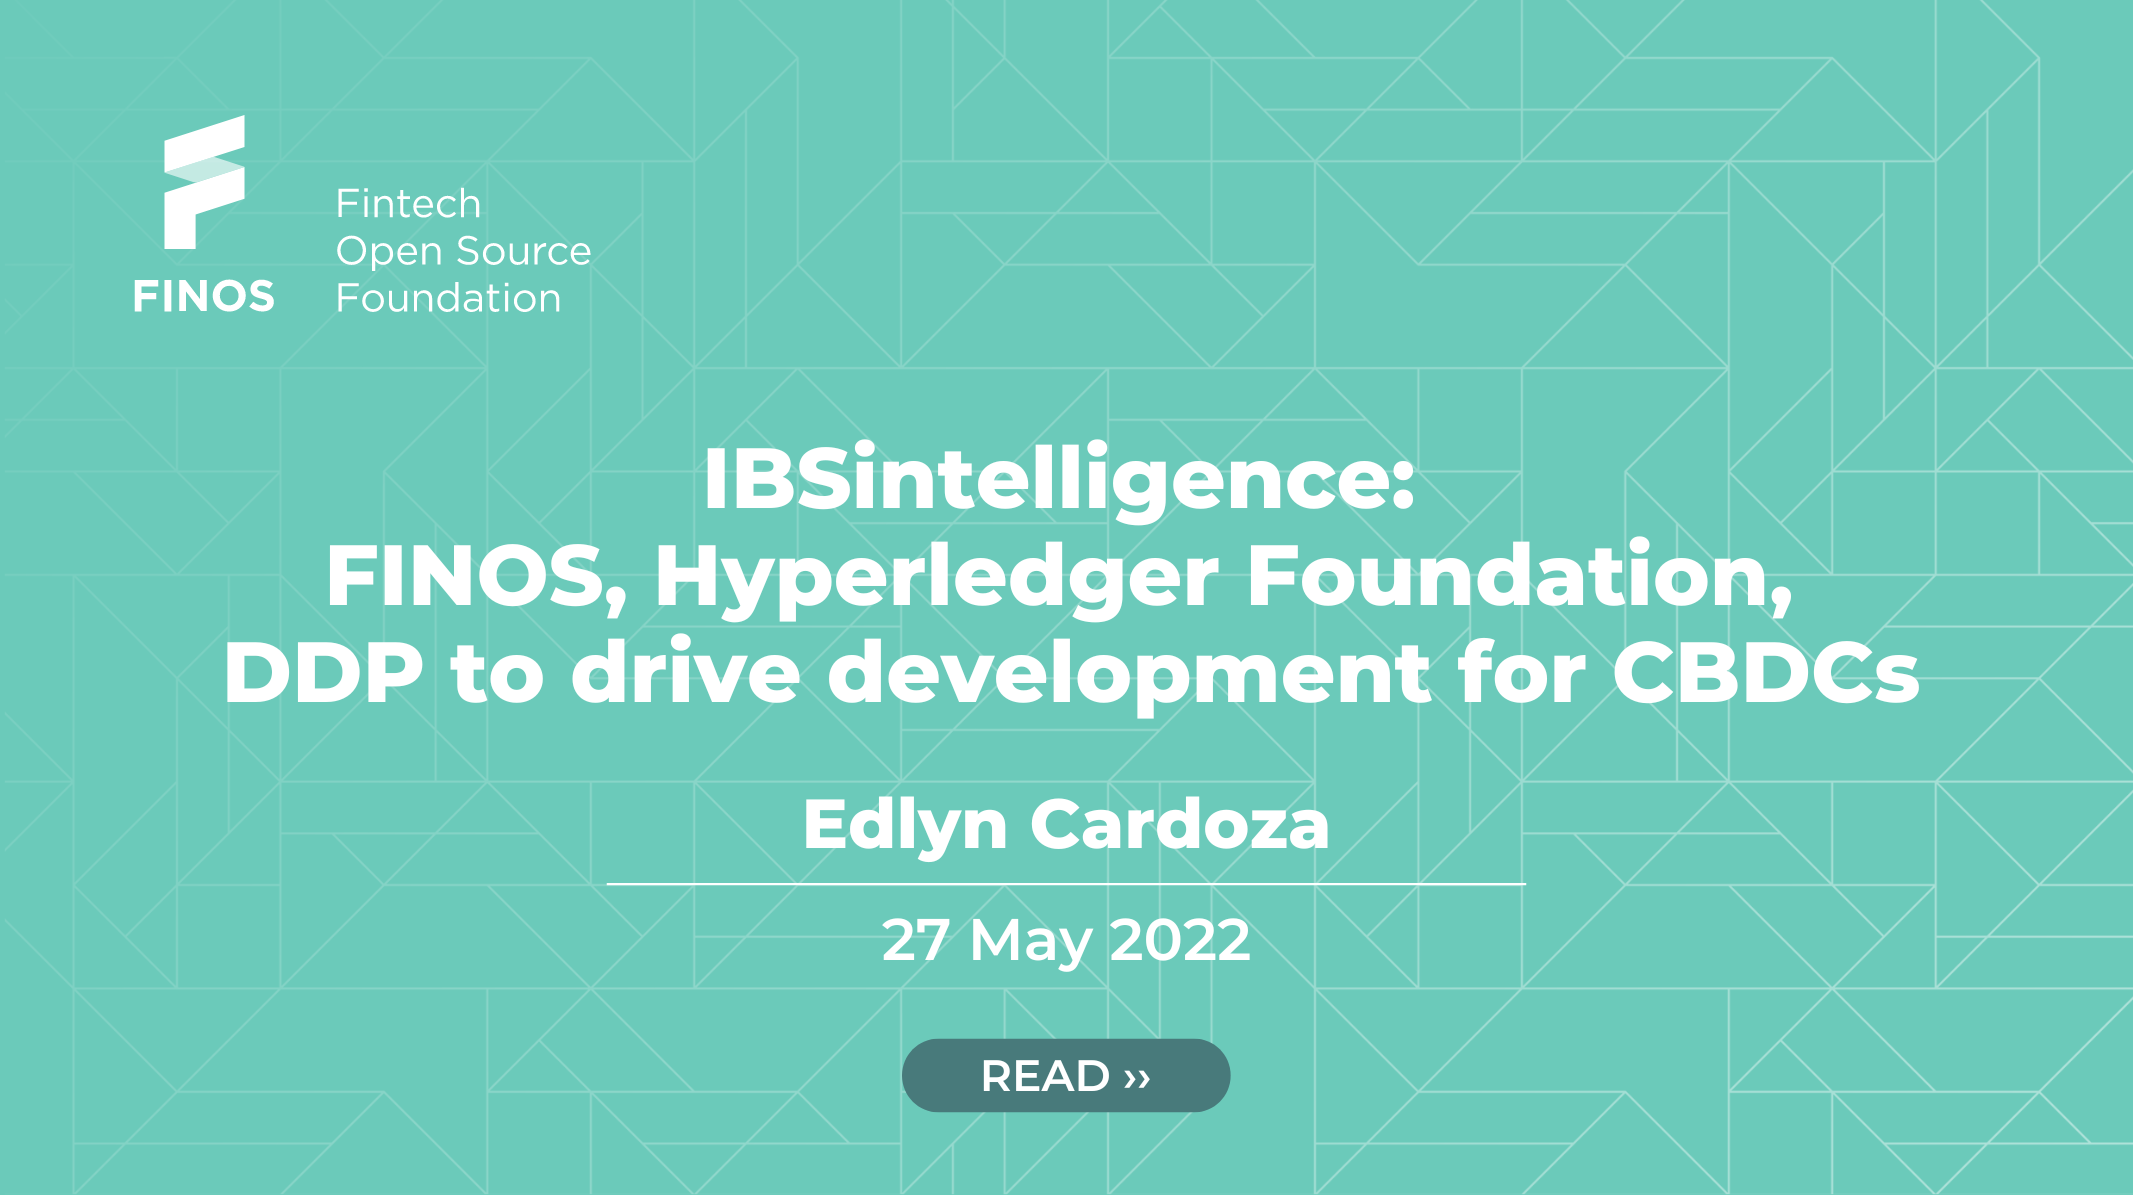 IBSintelligence: FINOS, Hyperledger Foundation, DDP to drive development for CBDCs